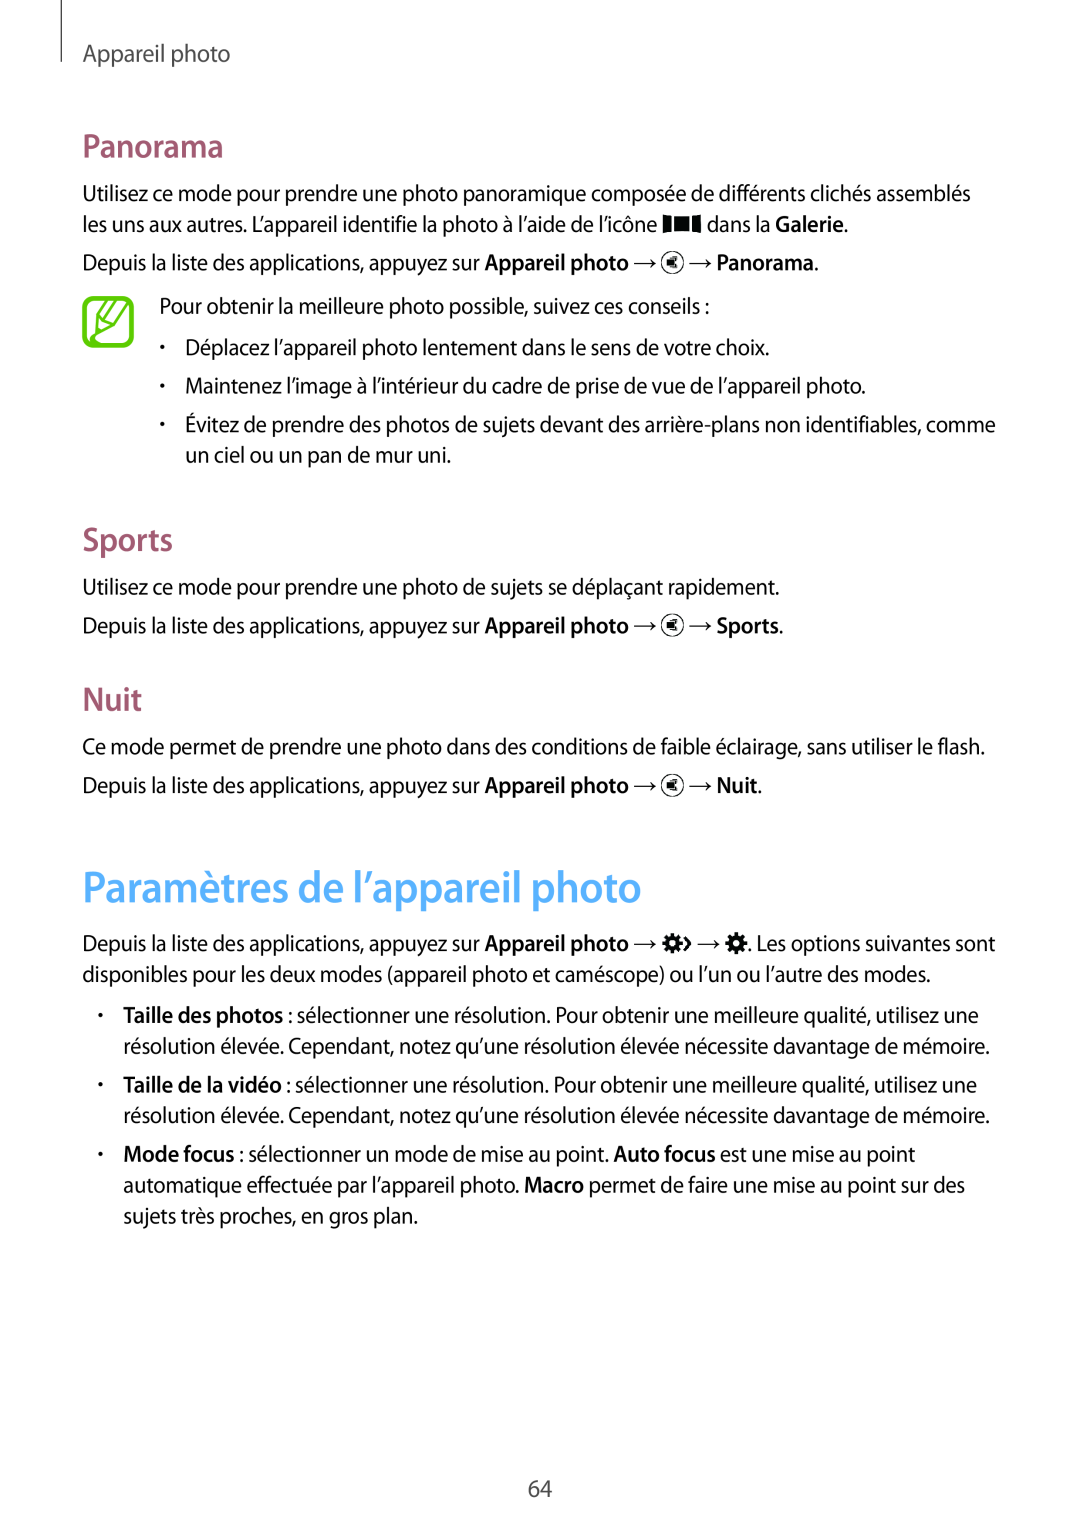 Samsung SM-G357FZWZNRJ, SM-G357FZAZSFR manual Paramètres de l’appareil photo, Panorama, Sports, Nuit, Appareil photo 